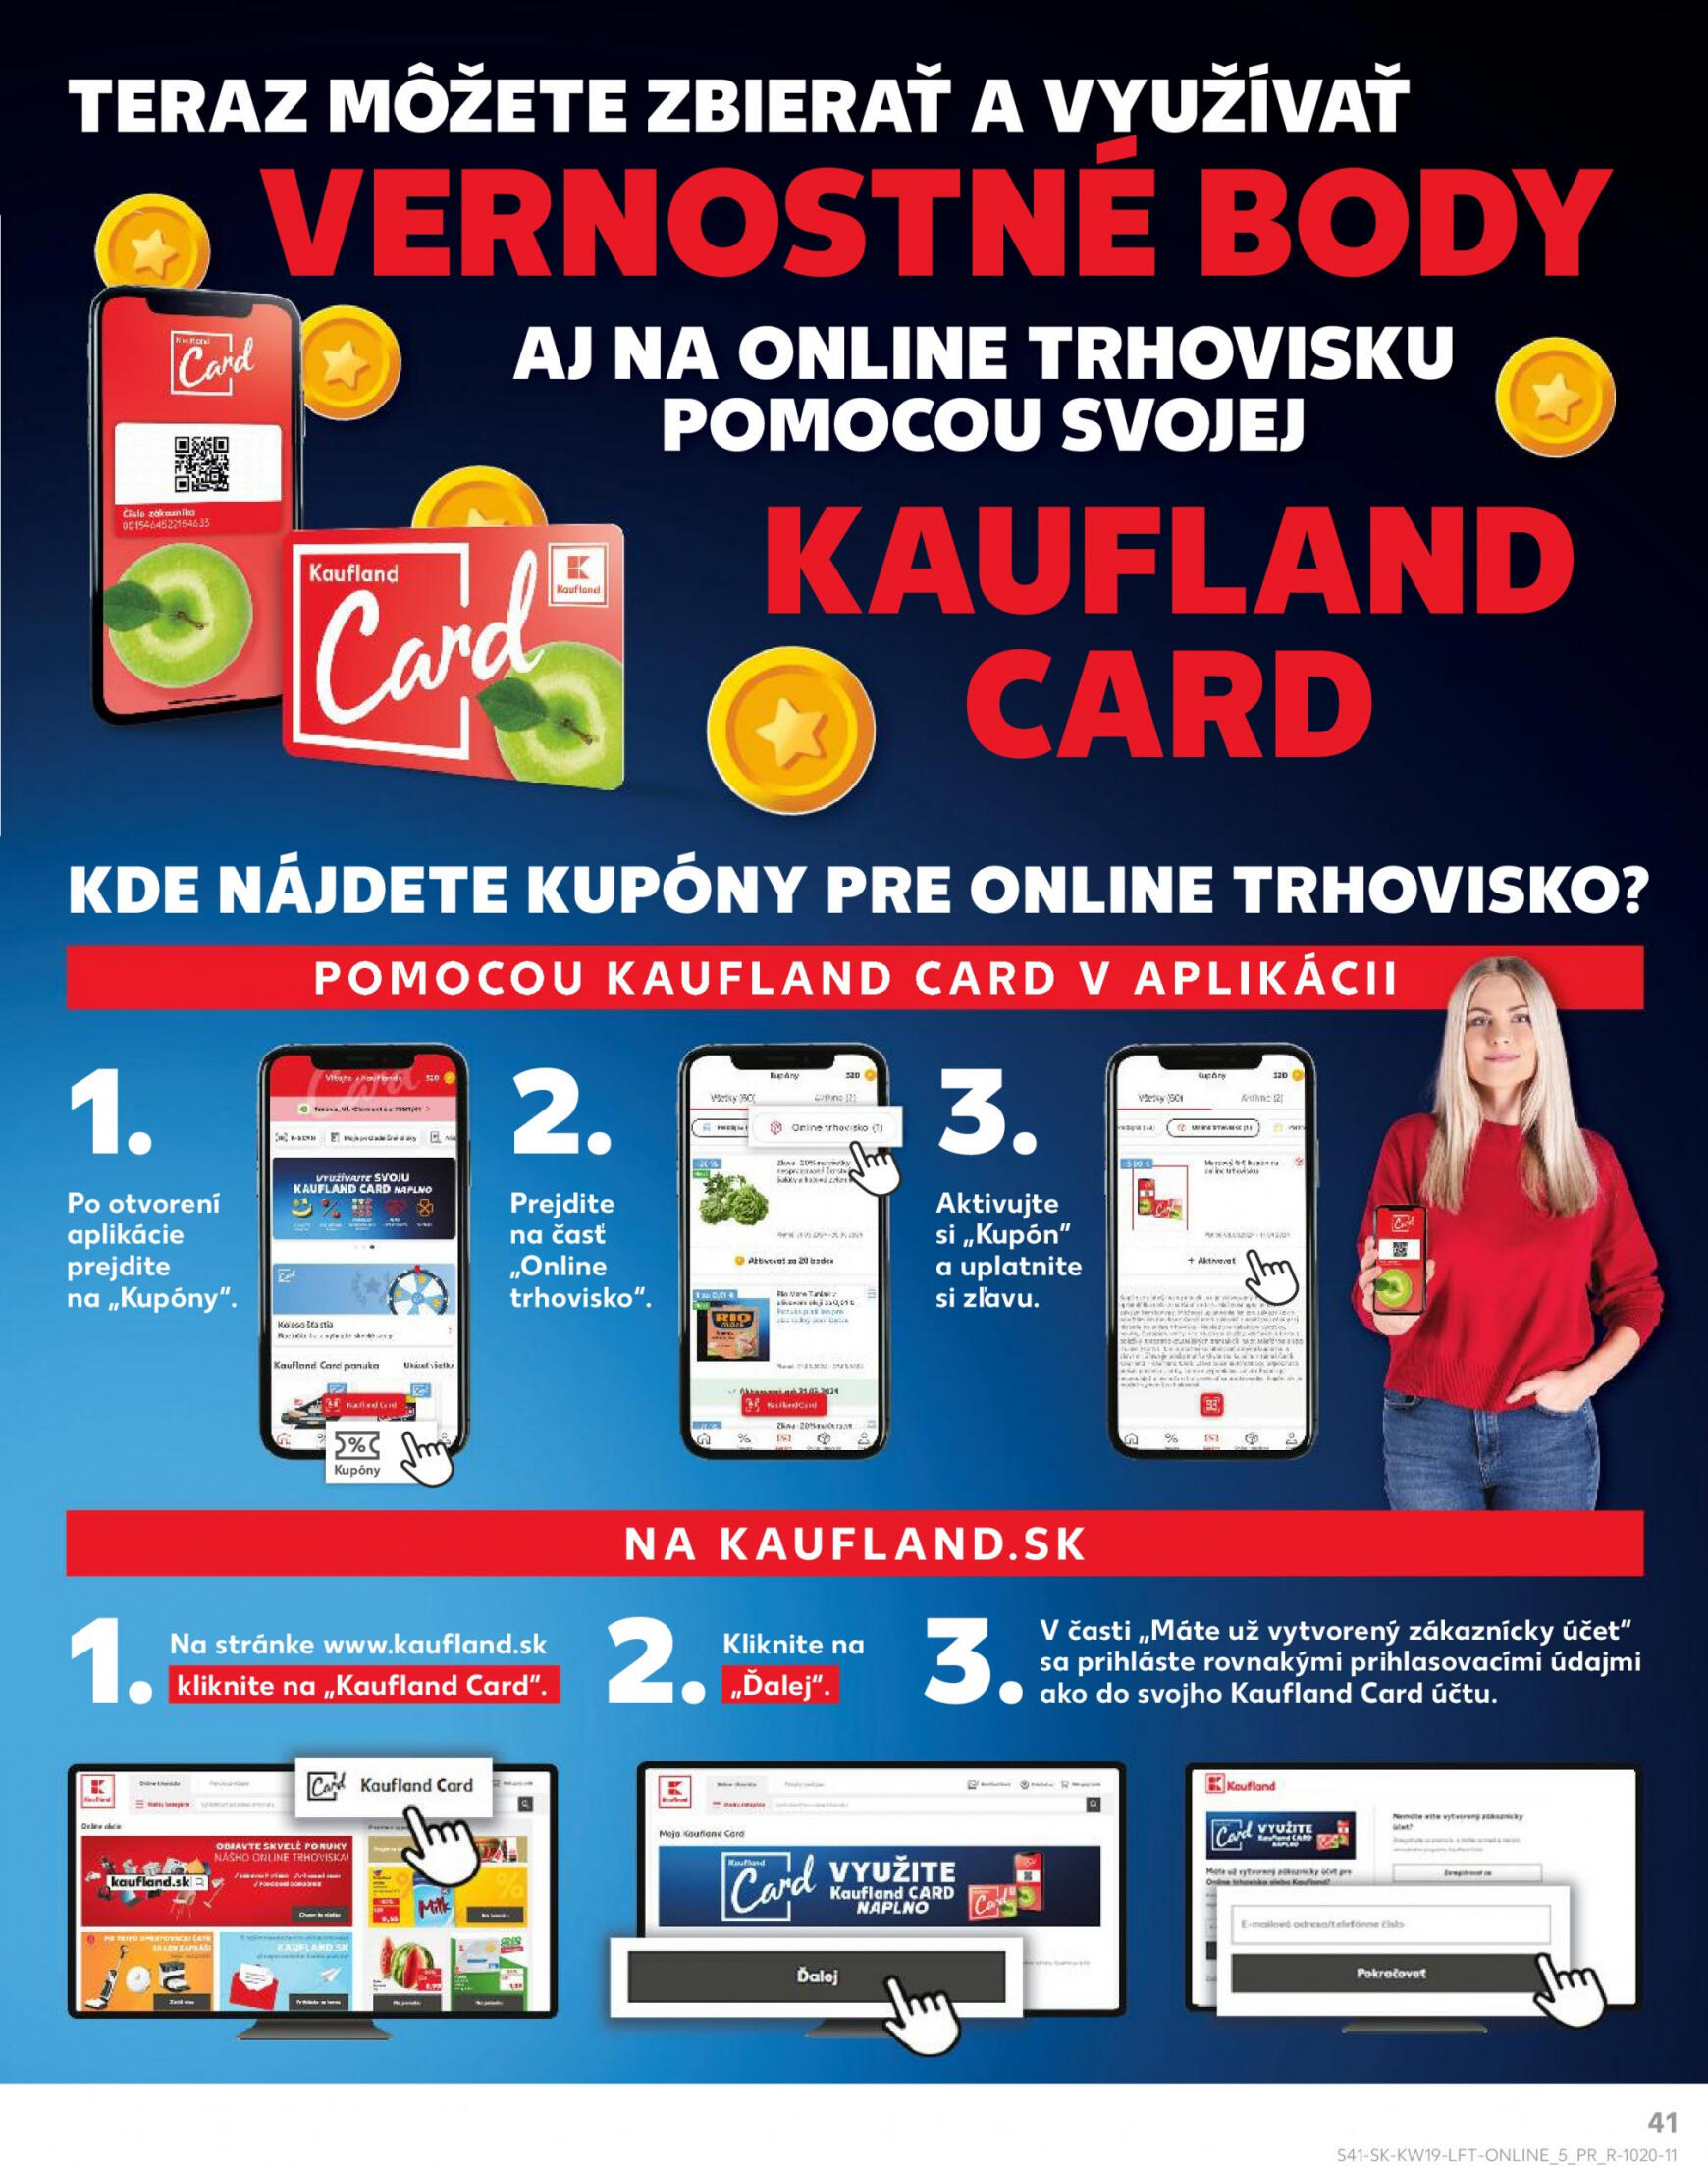 kaufland - Kaufland leták platný od 09.05. - 15.05. - page: 41